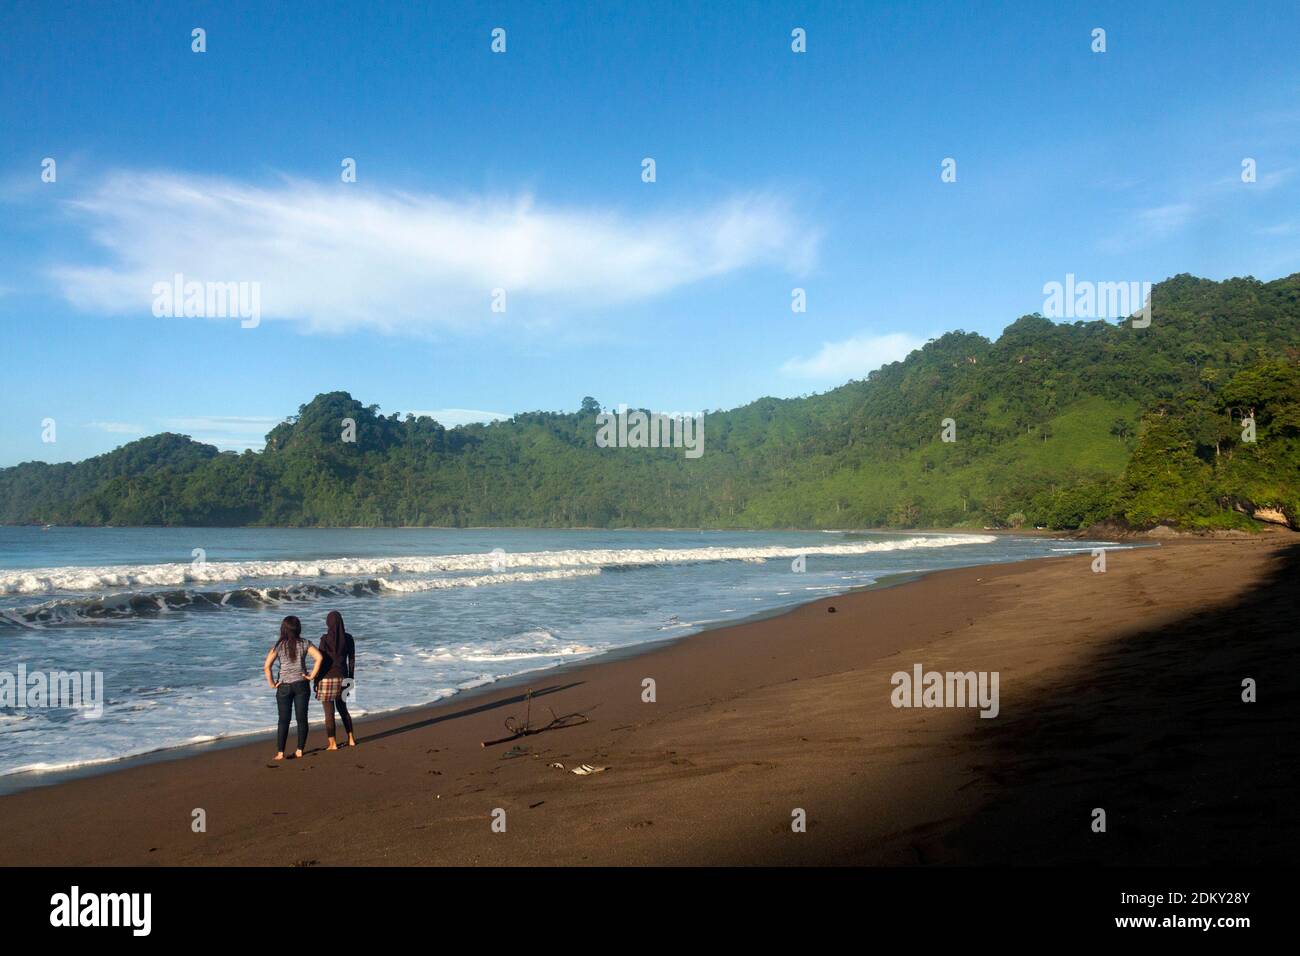 Tourists are enjoying the atmosphere of Bandealit beach in Meru Betiri National Park, Jember. Stock Photo